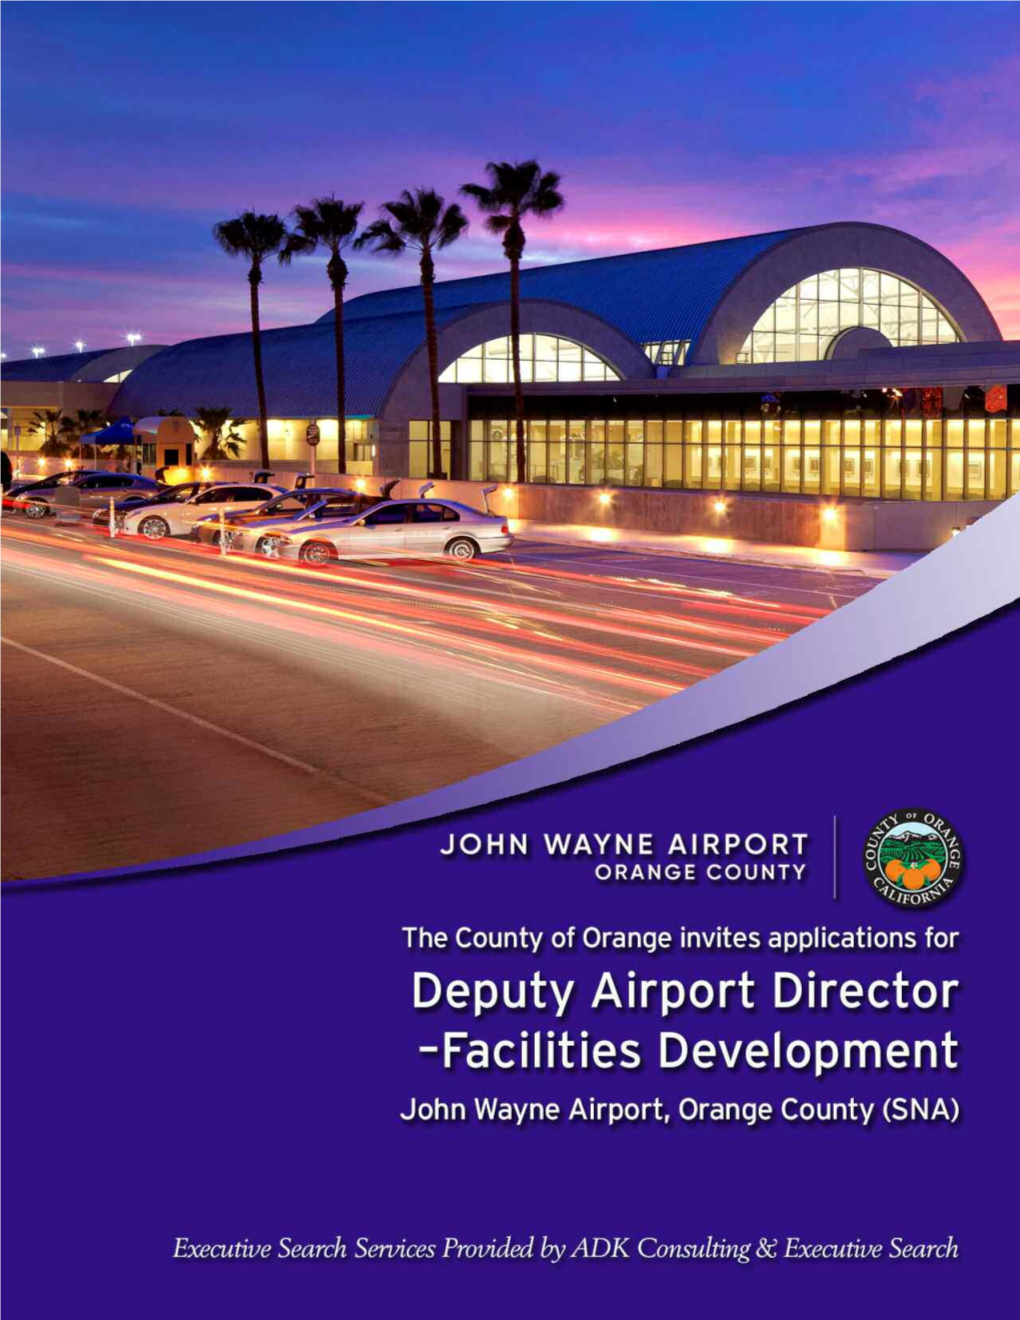 Deputy Airport Director – Facilities Development Position Leads the John Wayne Airport Facilities Development Division